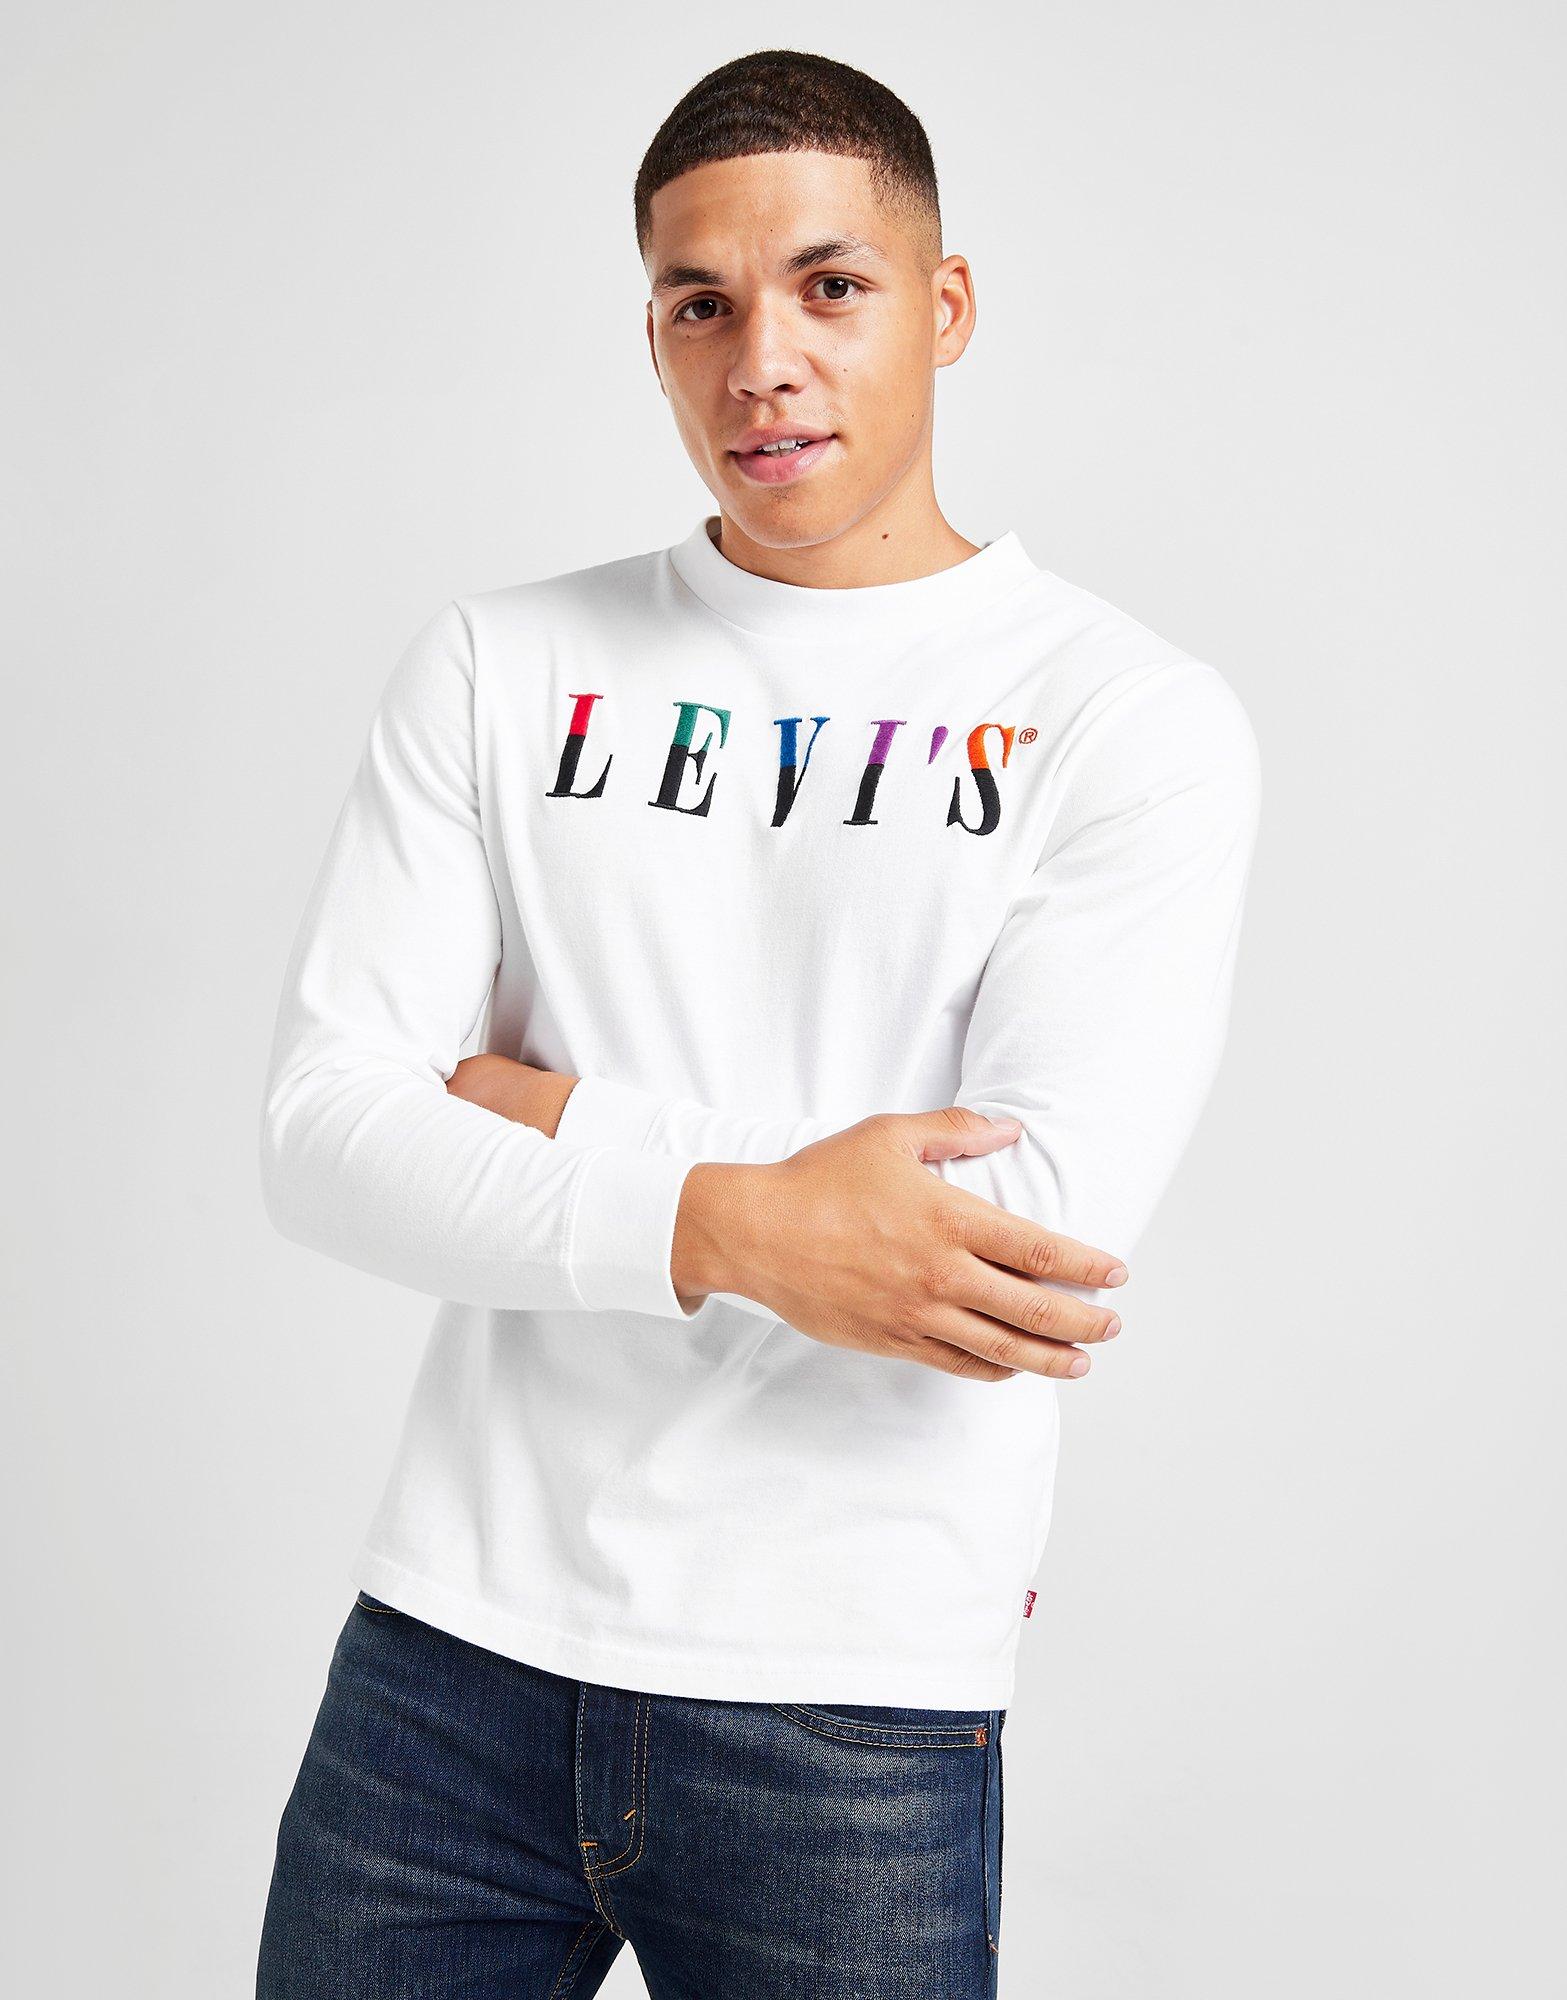 levis rainbow shirt